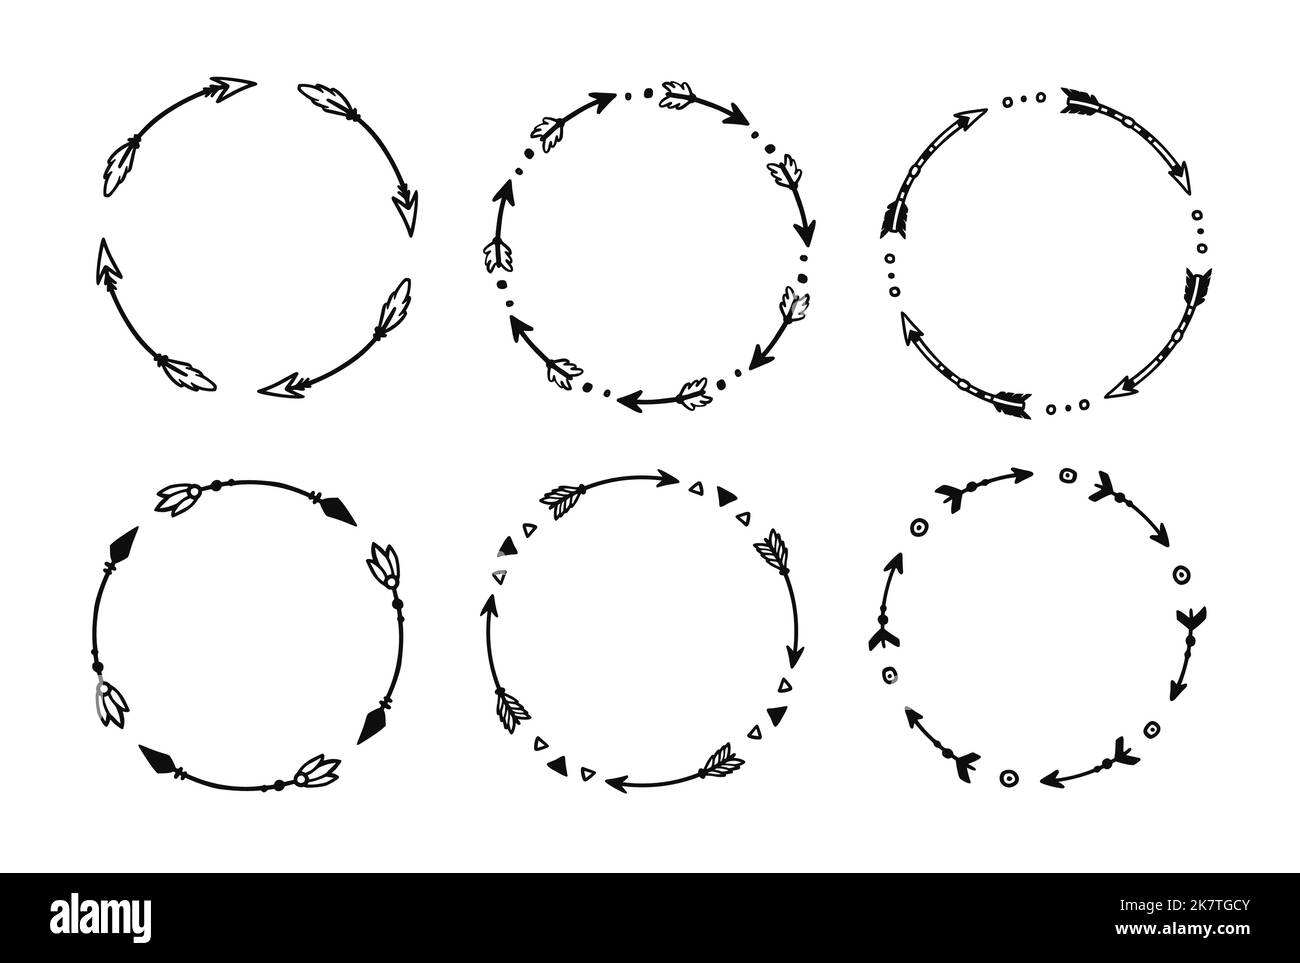 Boho arrow circle frame set. Hand drawn doodle african, aztec rustic ethnic arrow border, ornament circle frame. Tribal boho decor design. Vector illustration. Stock Vector